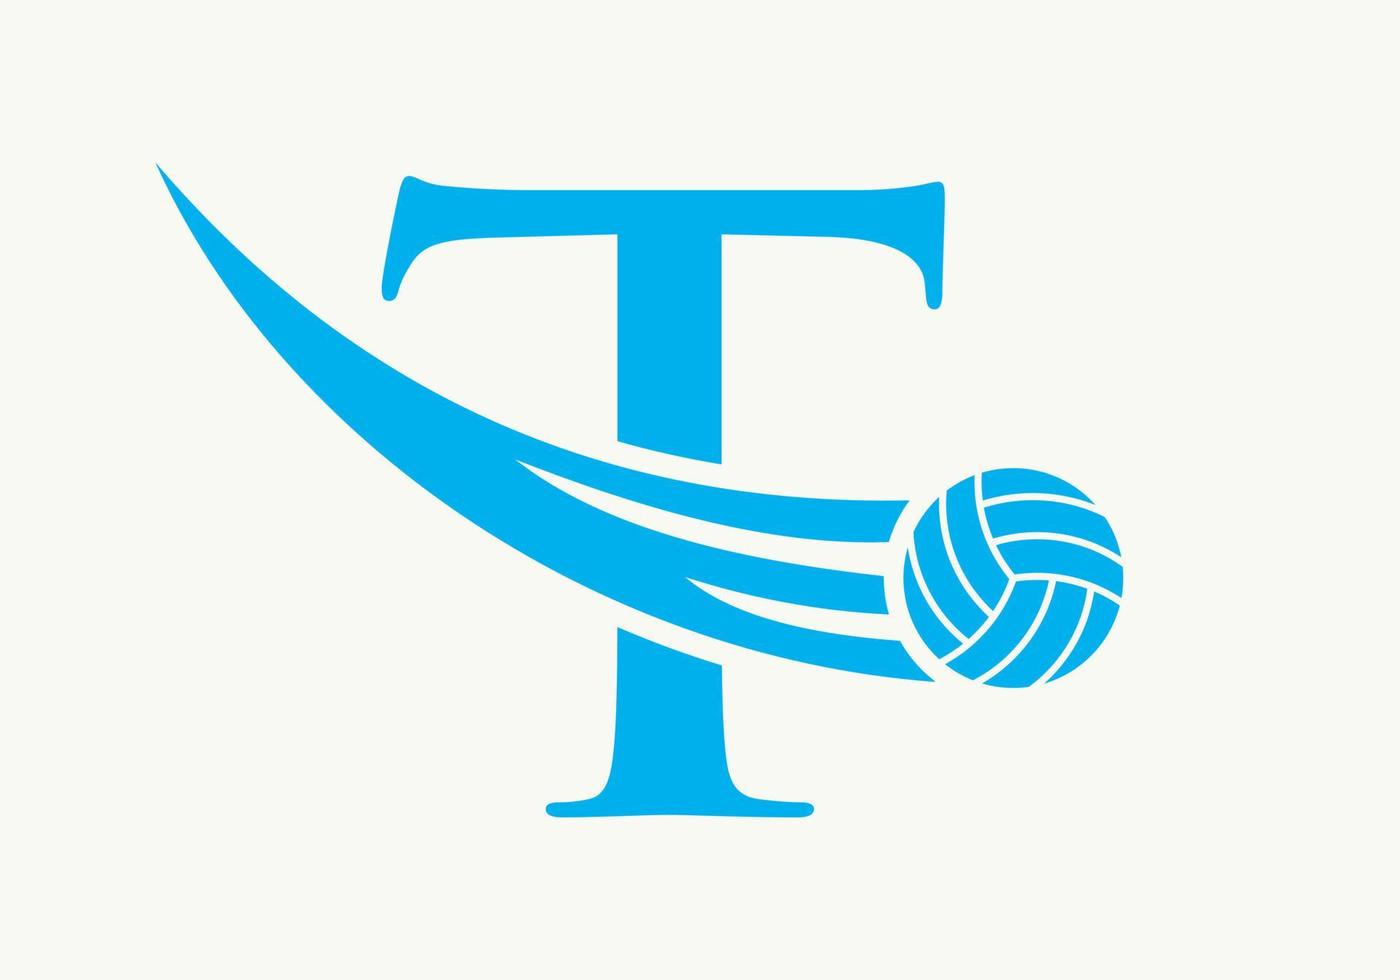 brev t volleyboll logotyp design tecken. volleyboll sporter logotyp symbol vektor mall